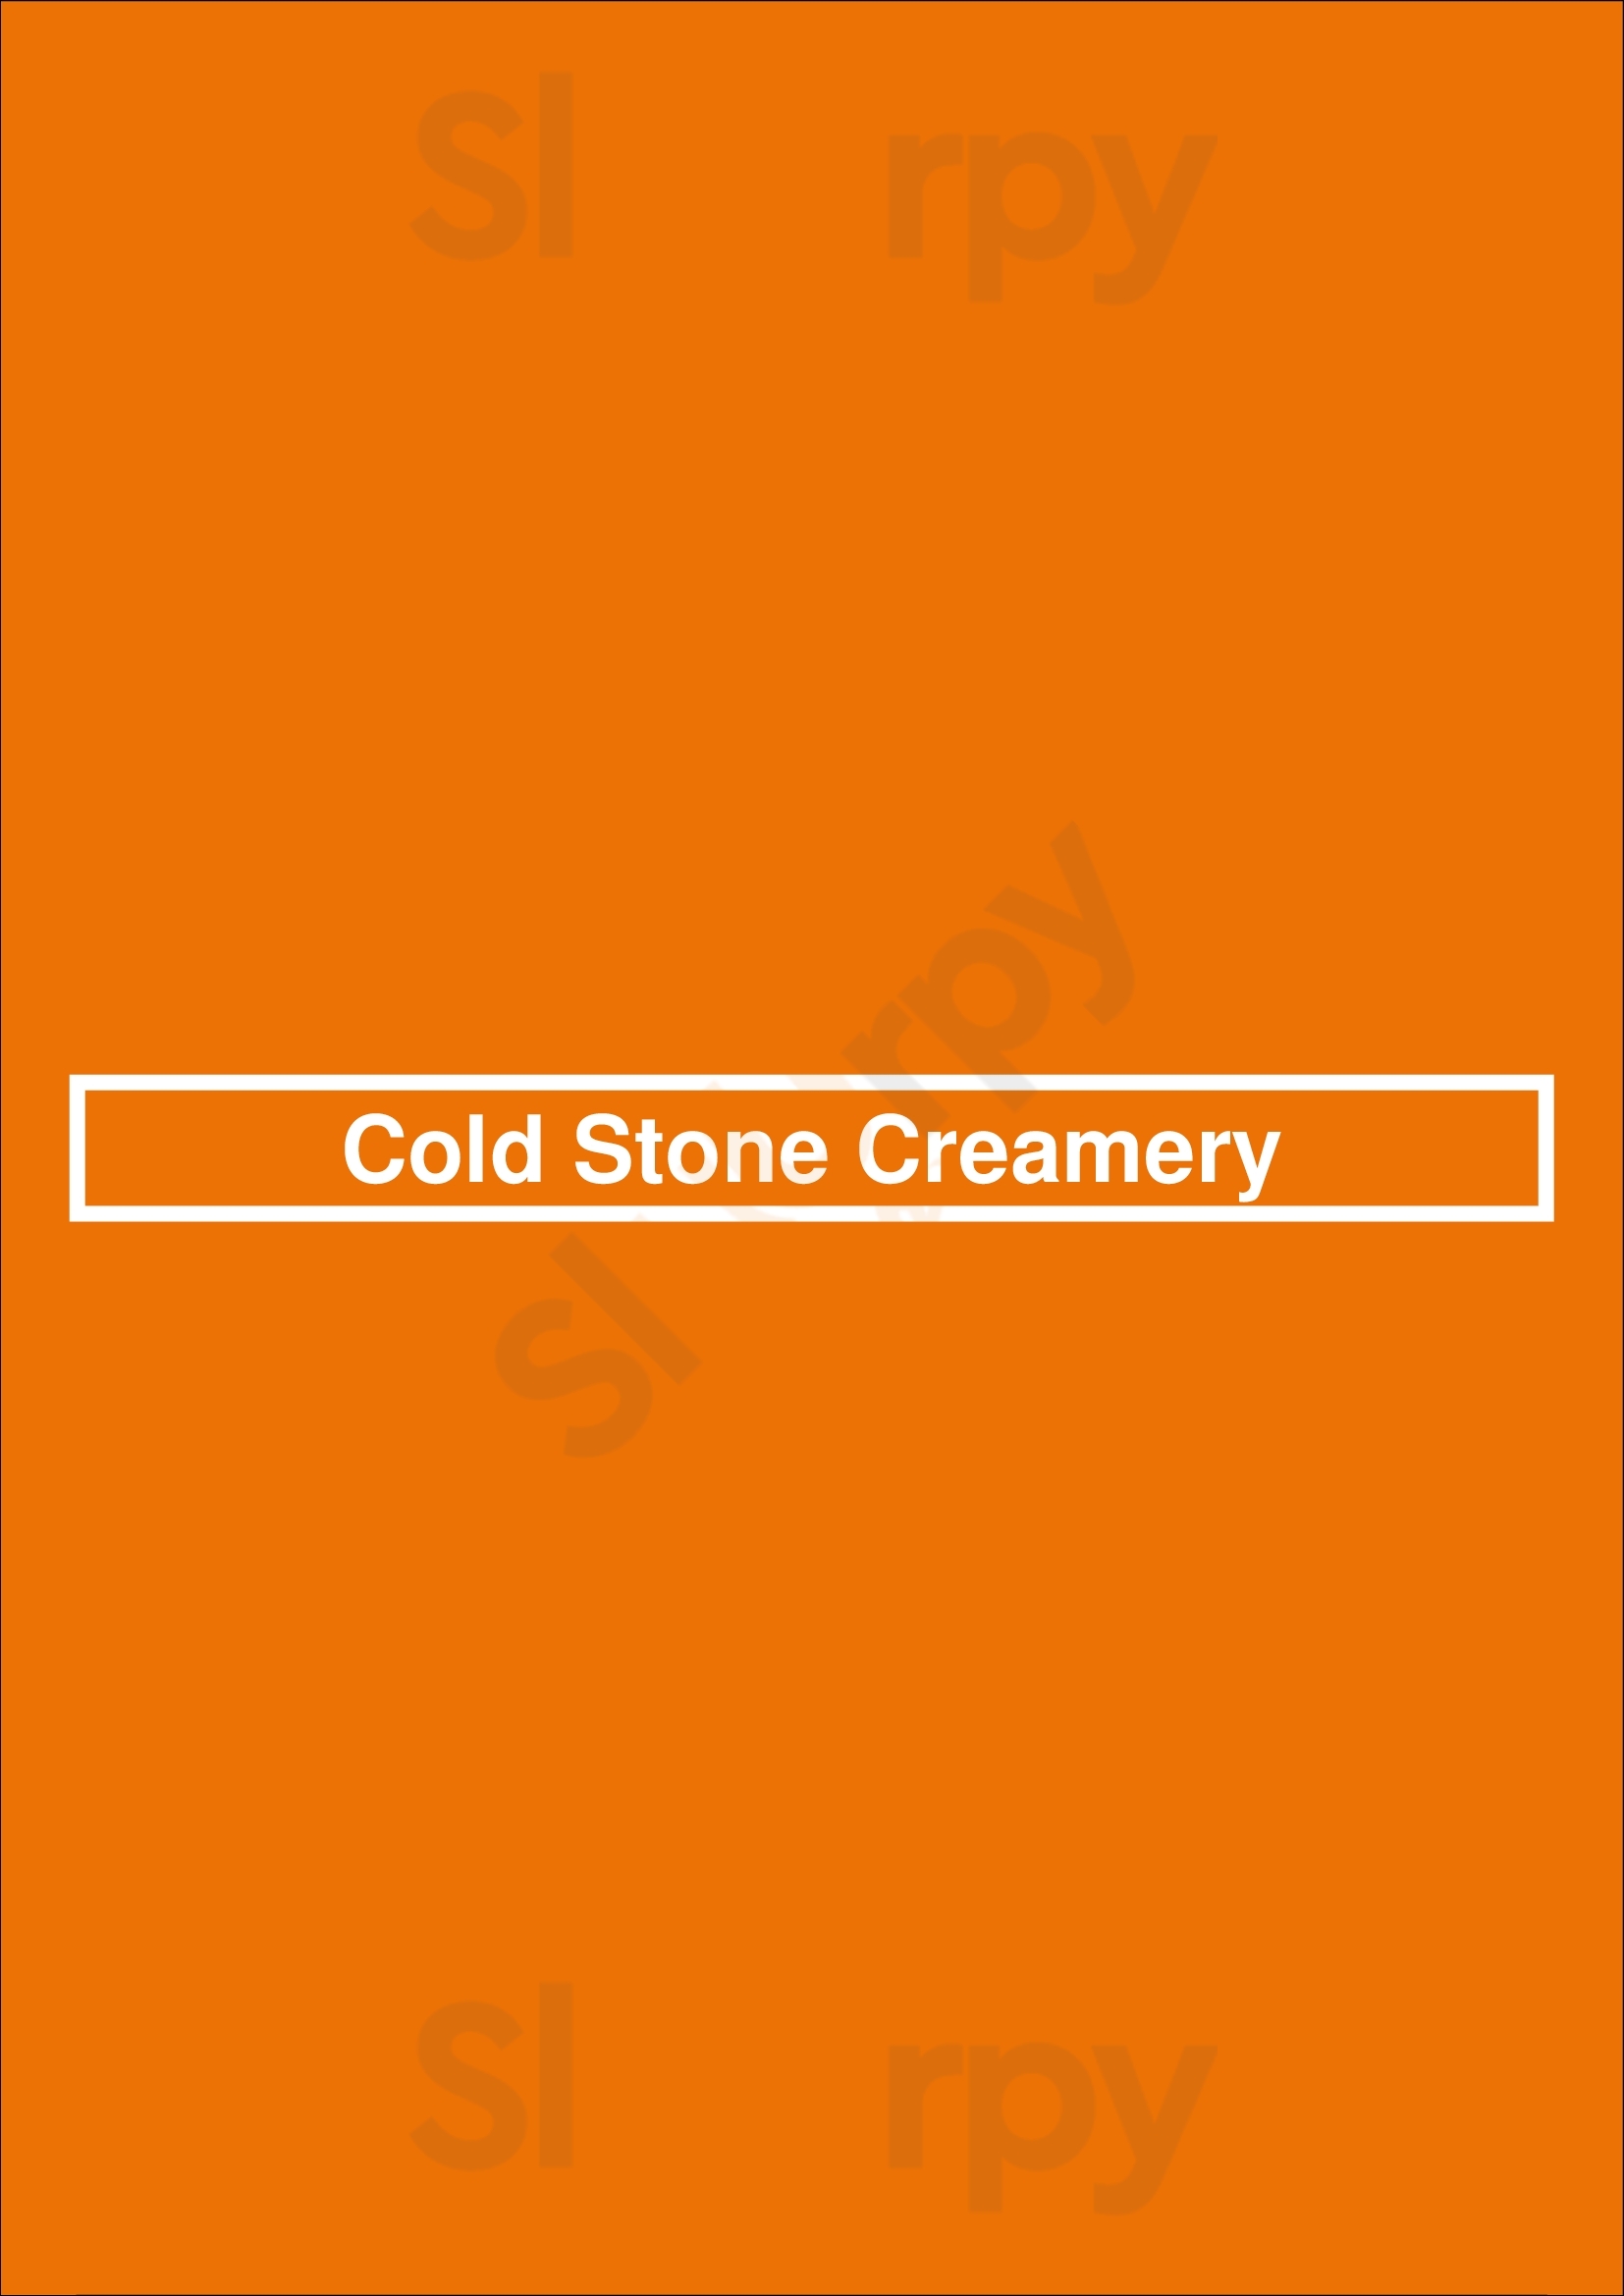 Cold Stone Creamery Spokane Menu - 1